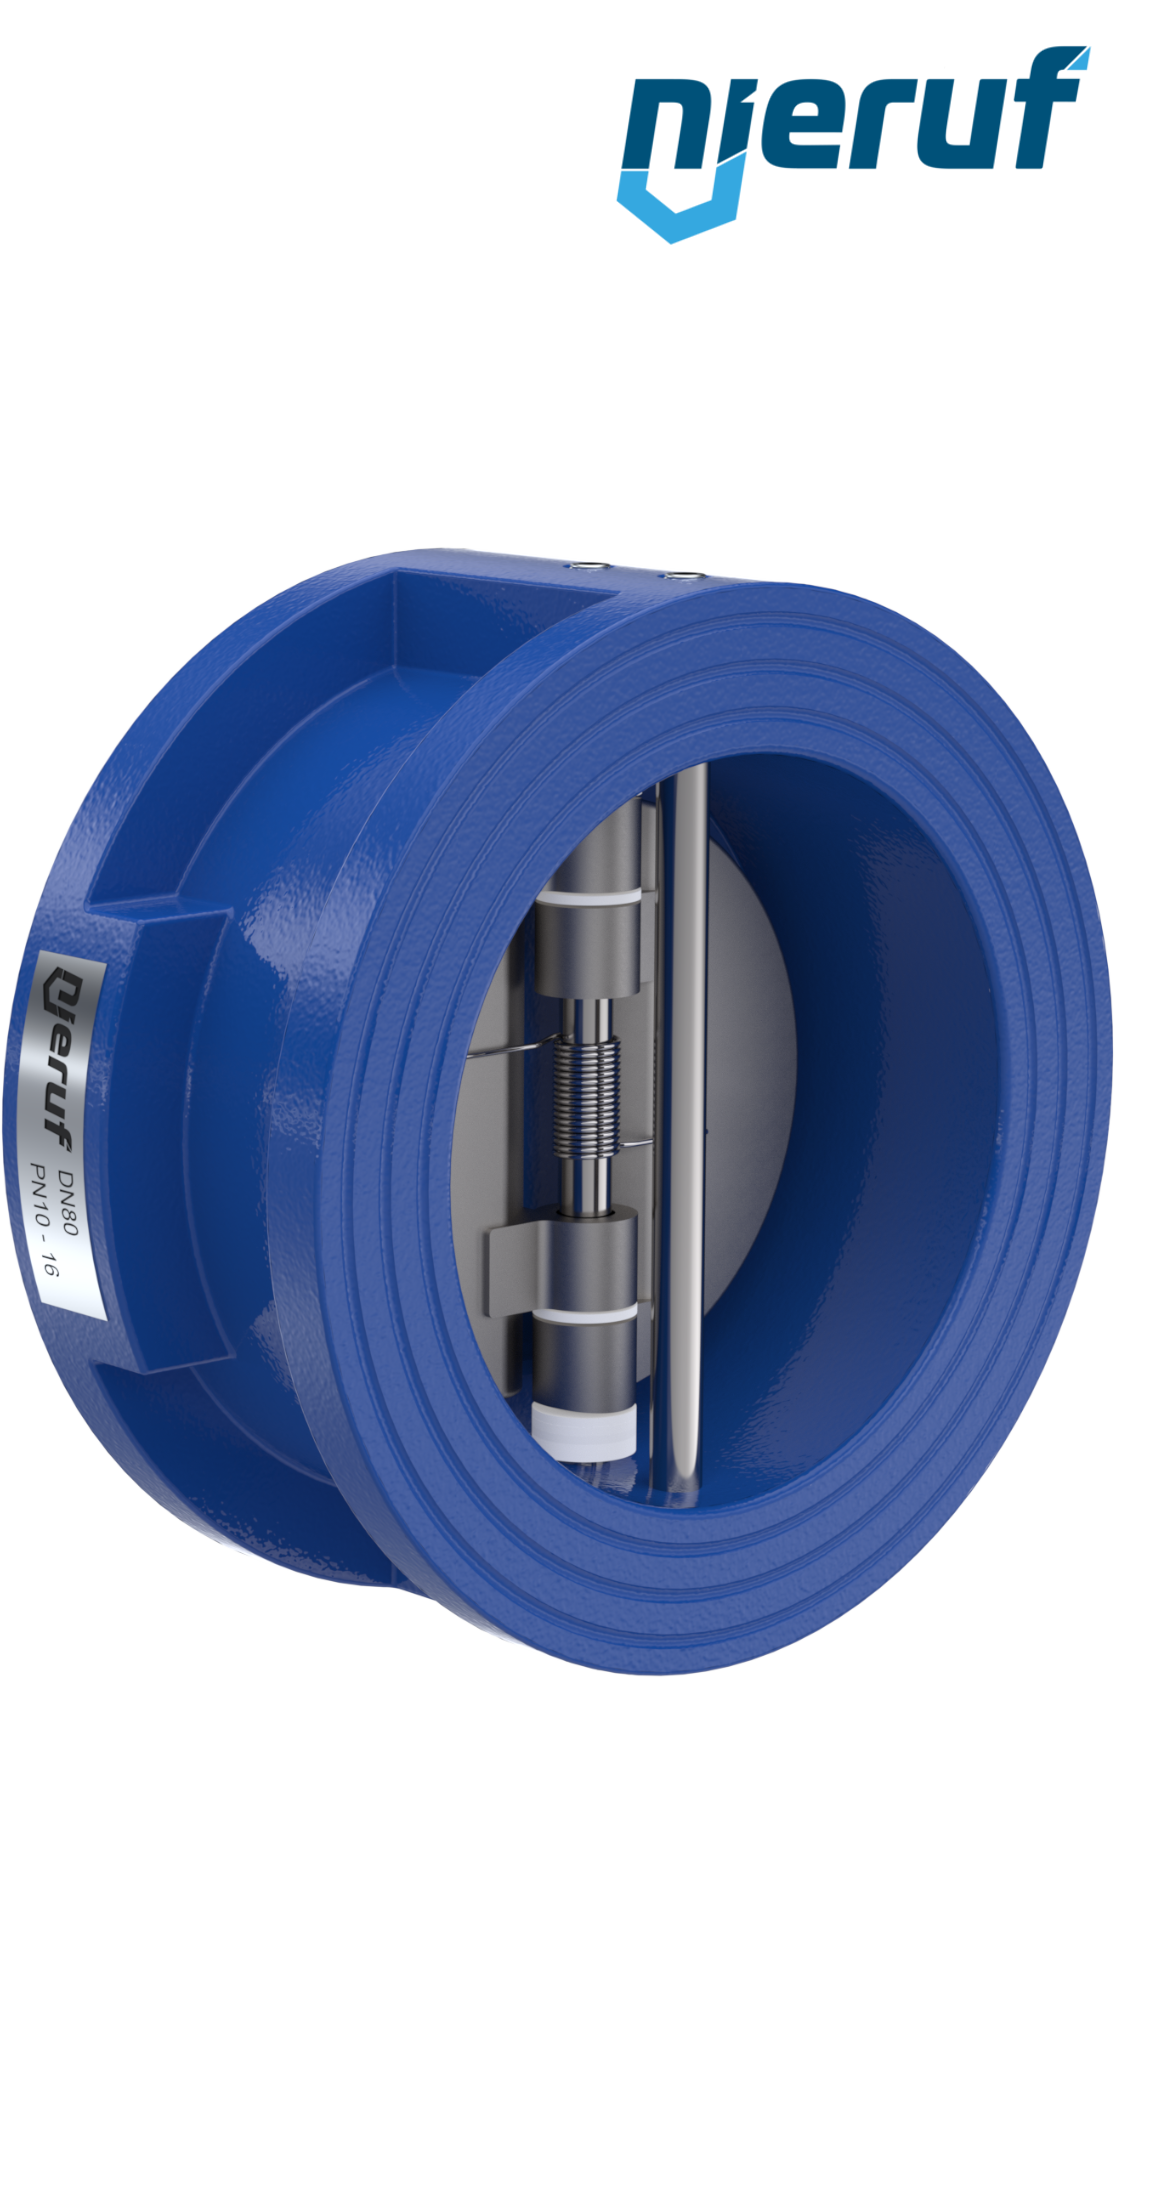 dual plate check valve DN80 DR02 GGG40 epoxyd plated blue 180µm FKM (Viton)